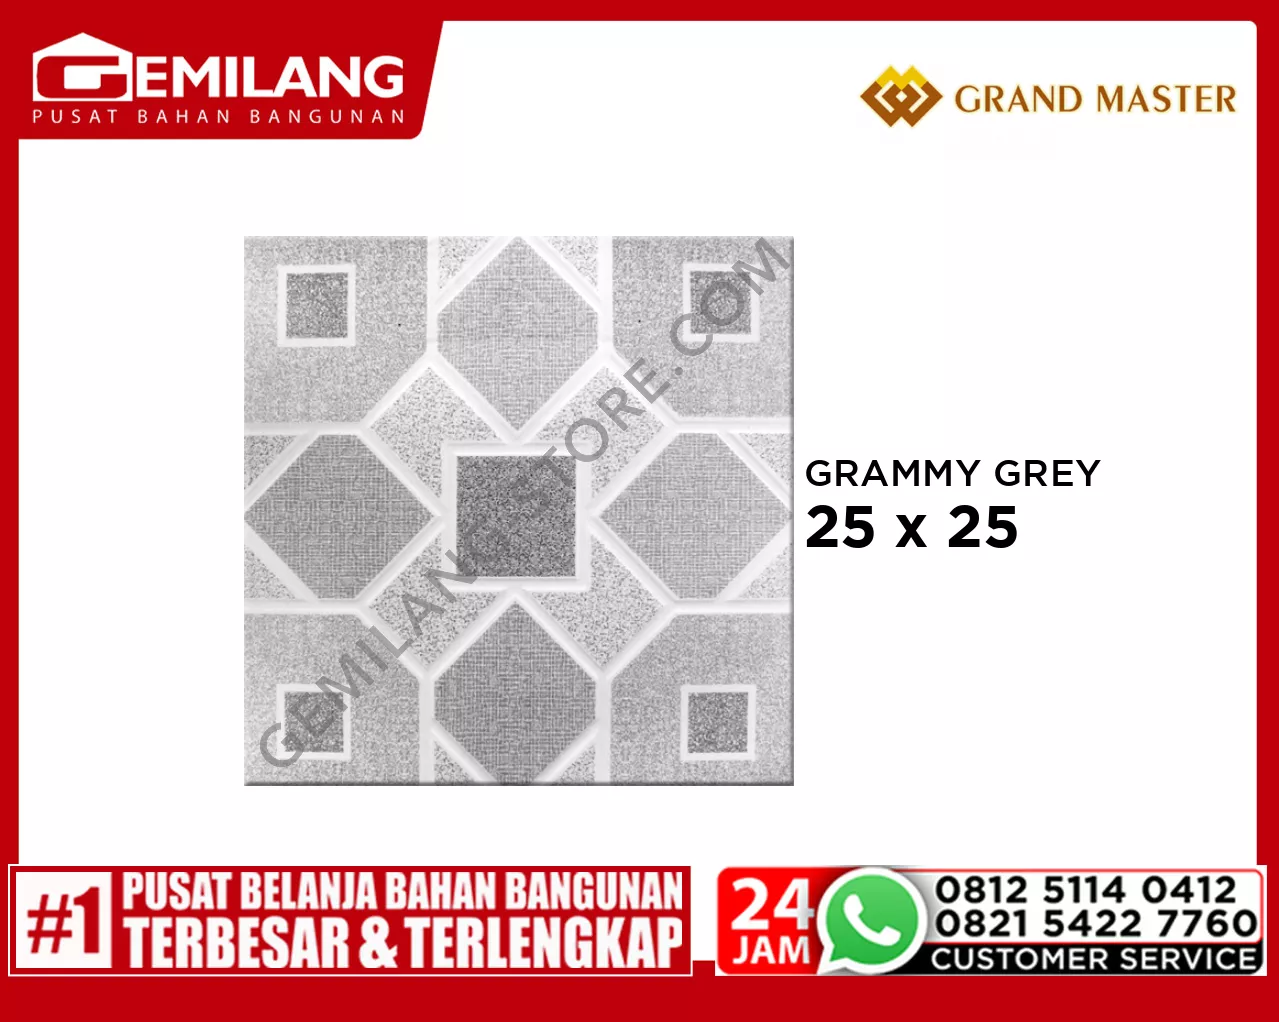 GRAND MASTER GRAMMY GREY 25 x 25